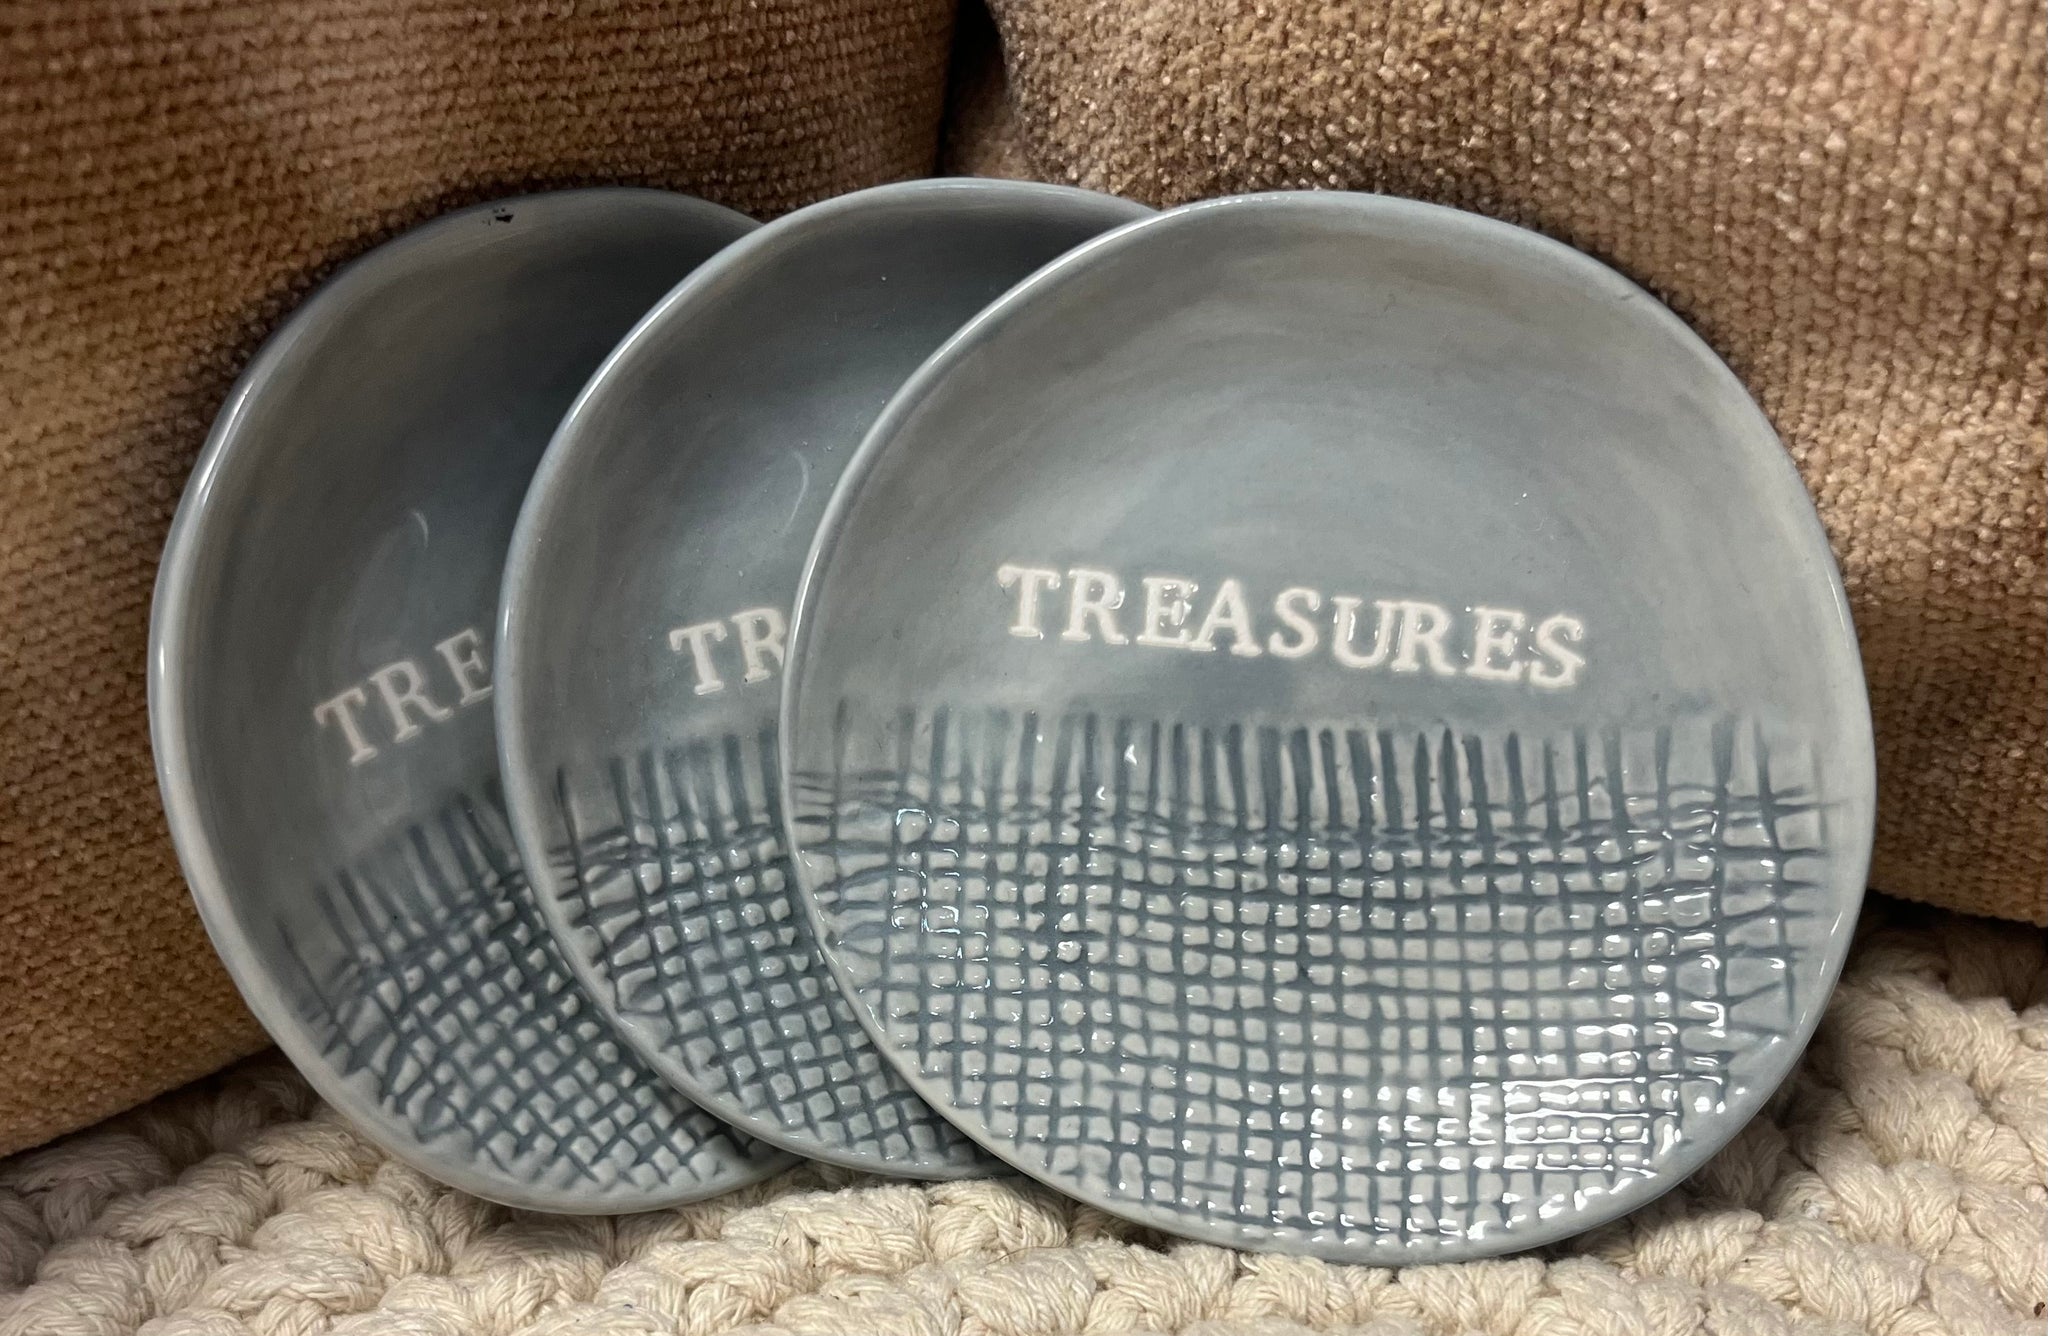 Treasures Small Plate